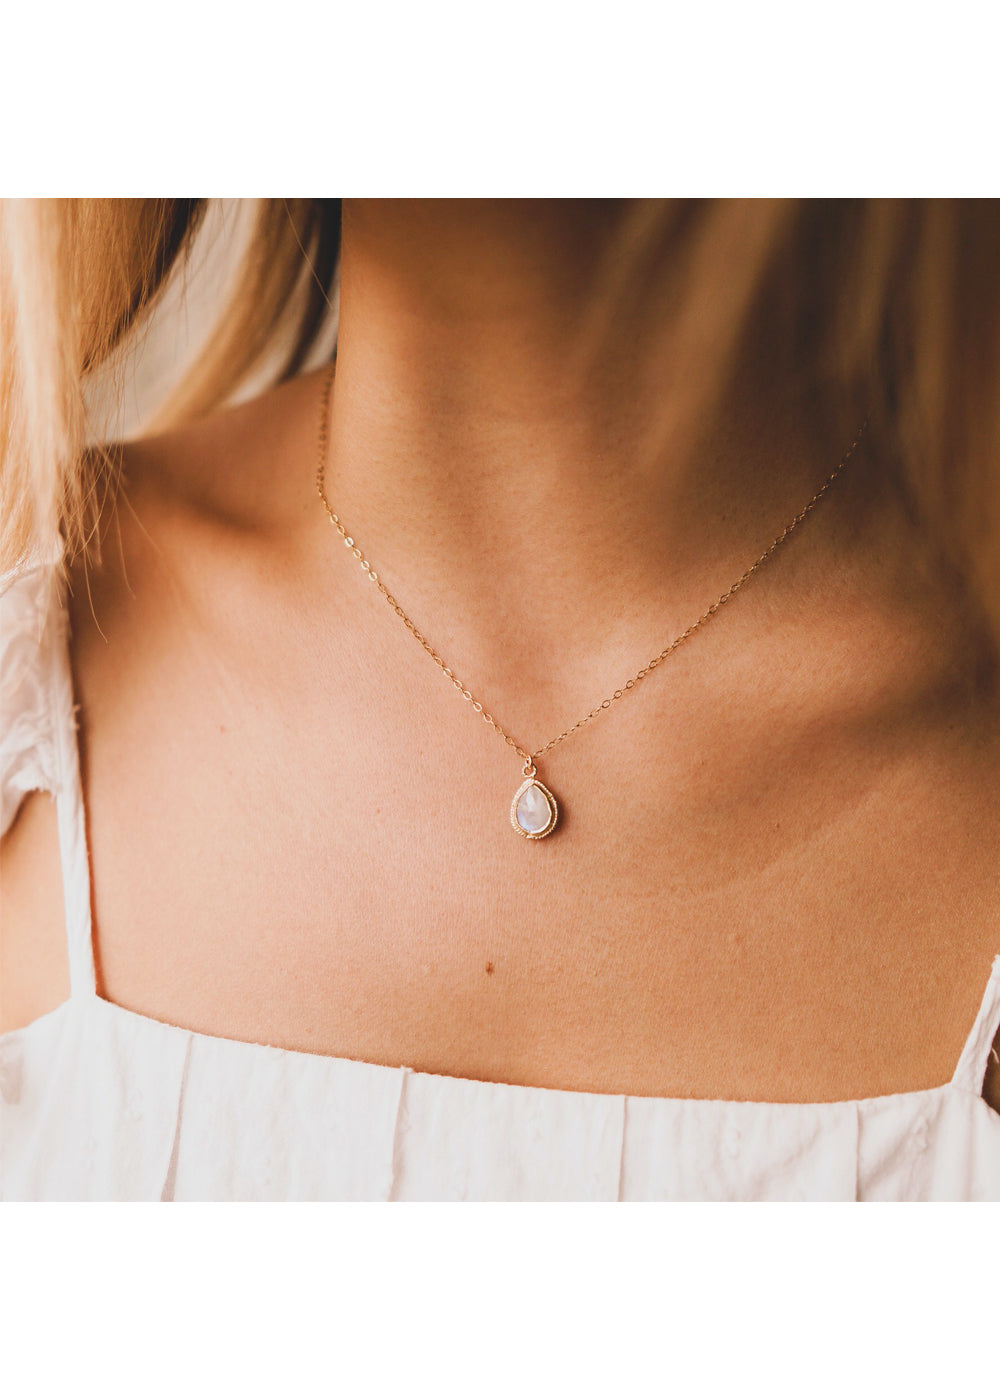 Vintage Moonstone Crystal Teardrop Pendant Necklace